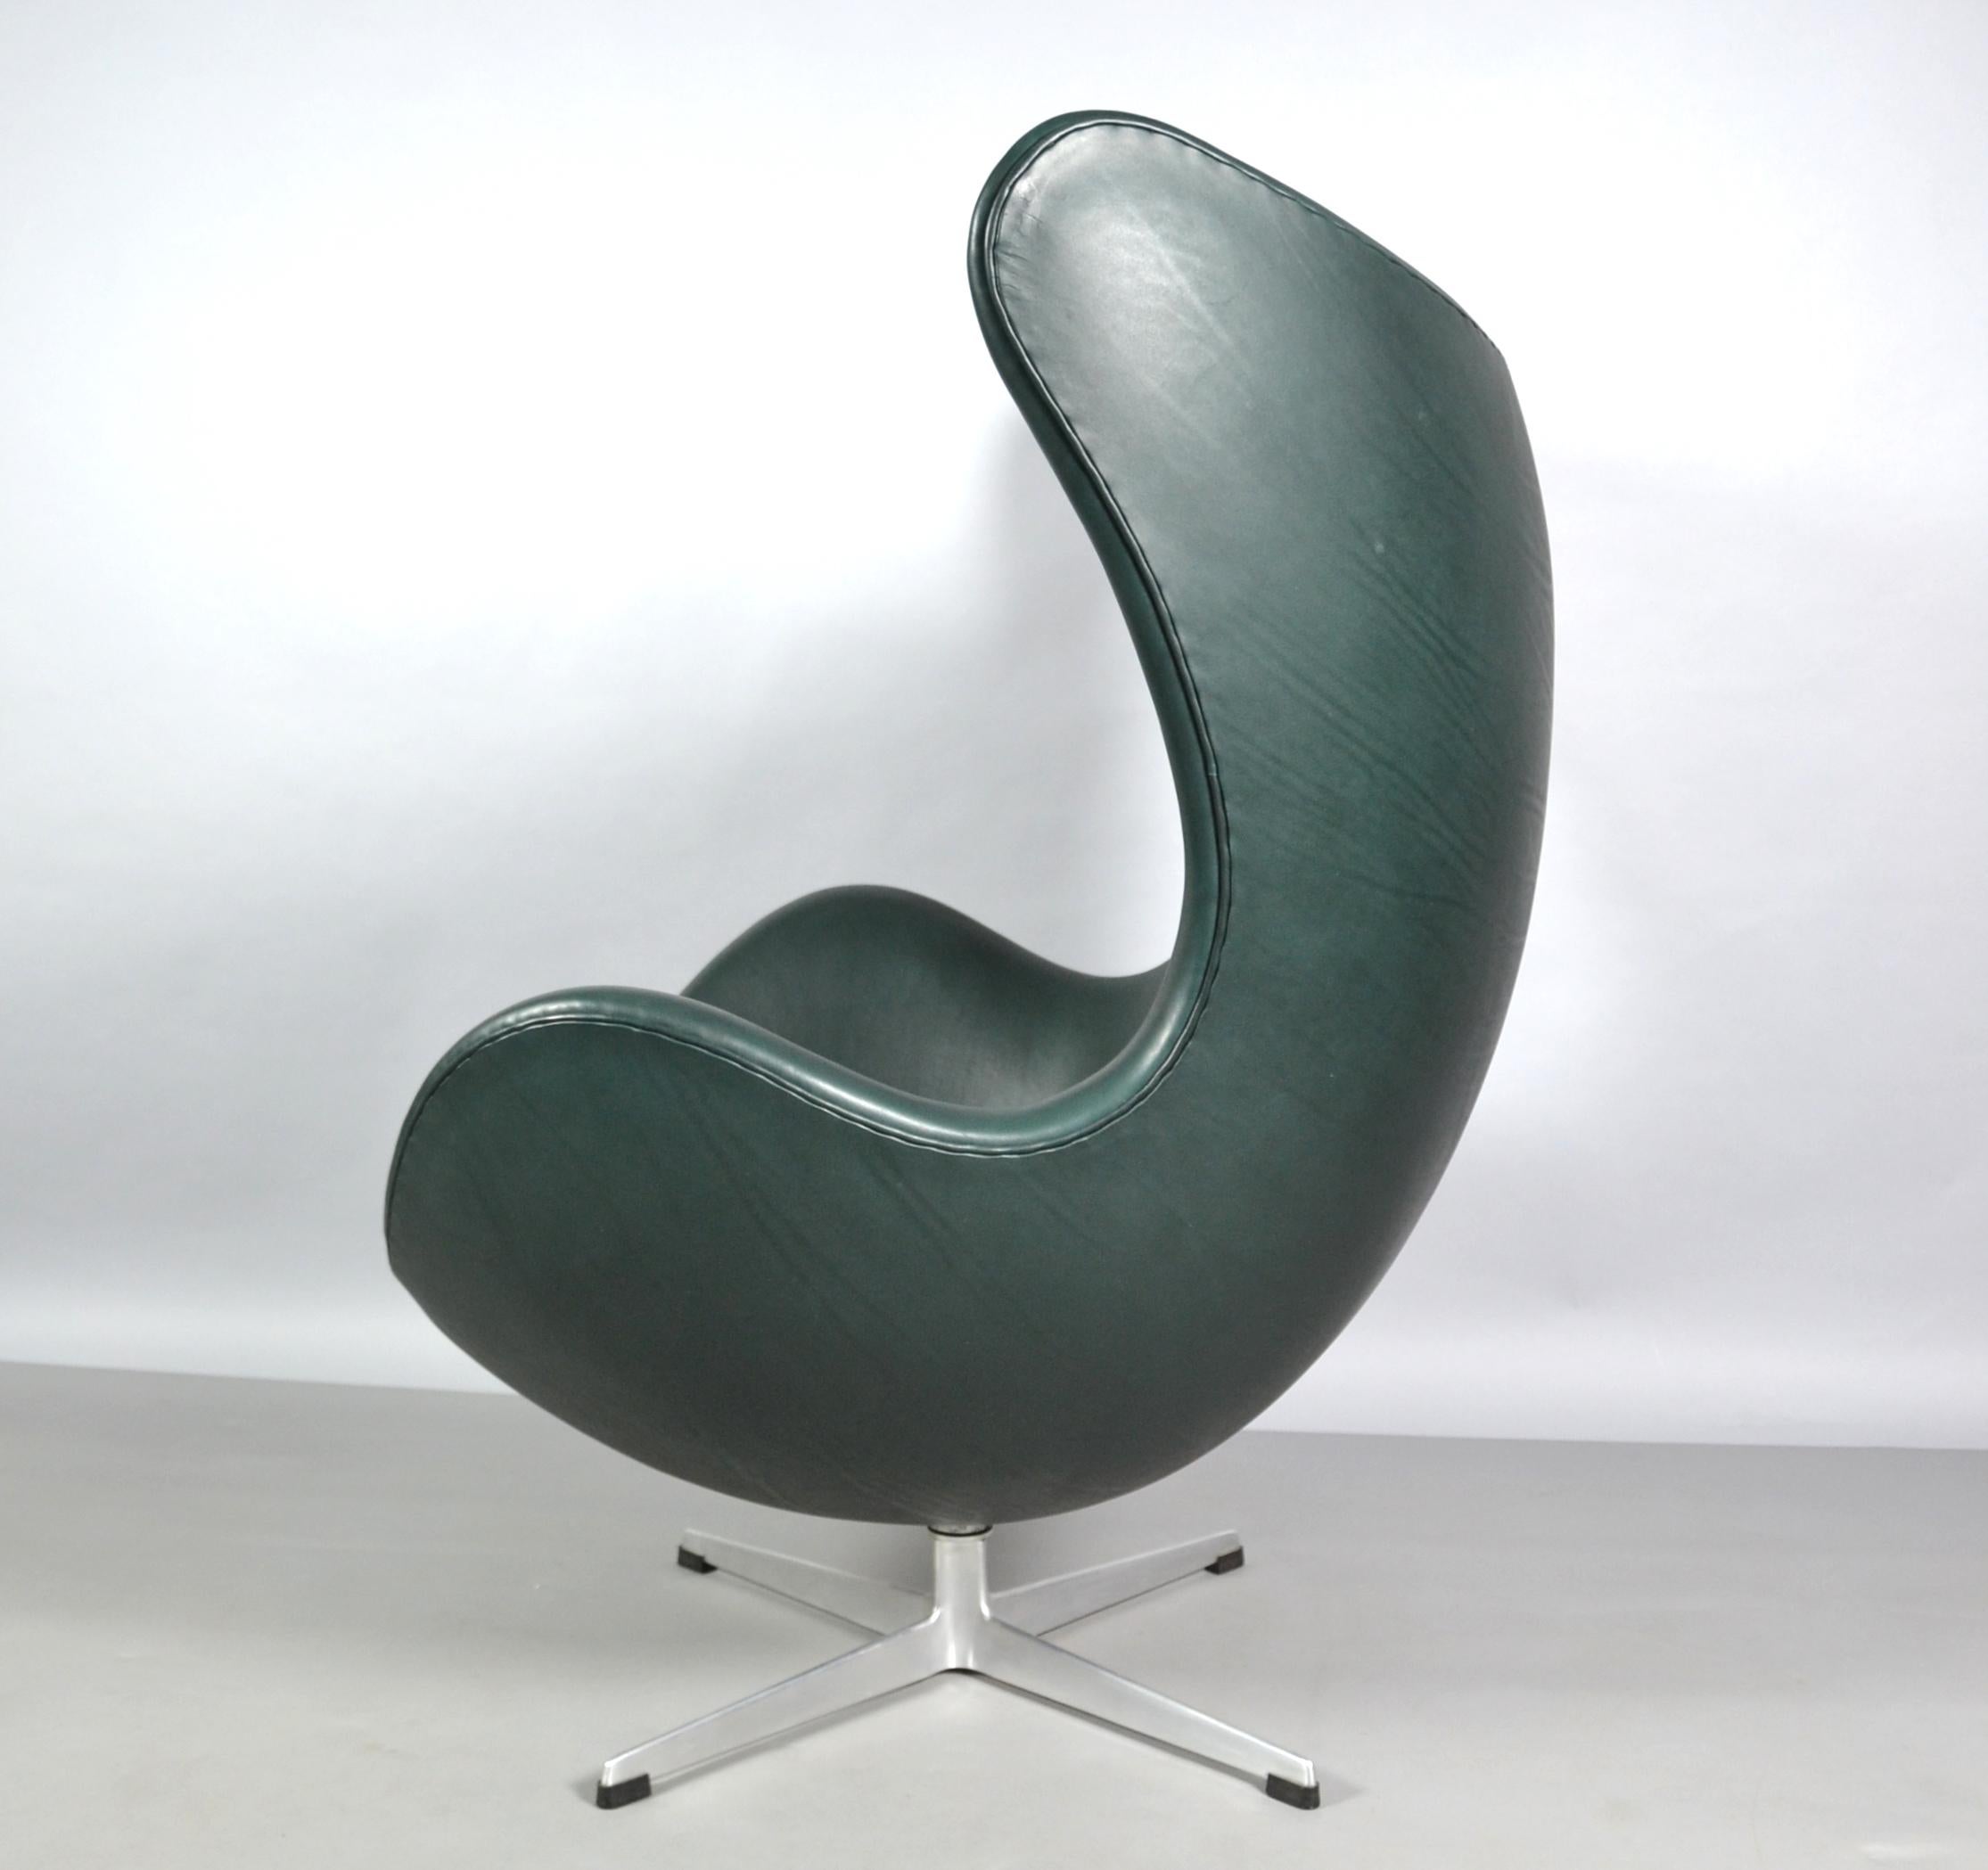 Scandinavian Modern Leather Egg Chair by Arne Jacobsen for Fritz Hansen, 1970s New Green Leather